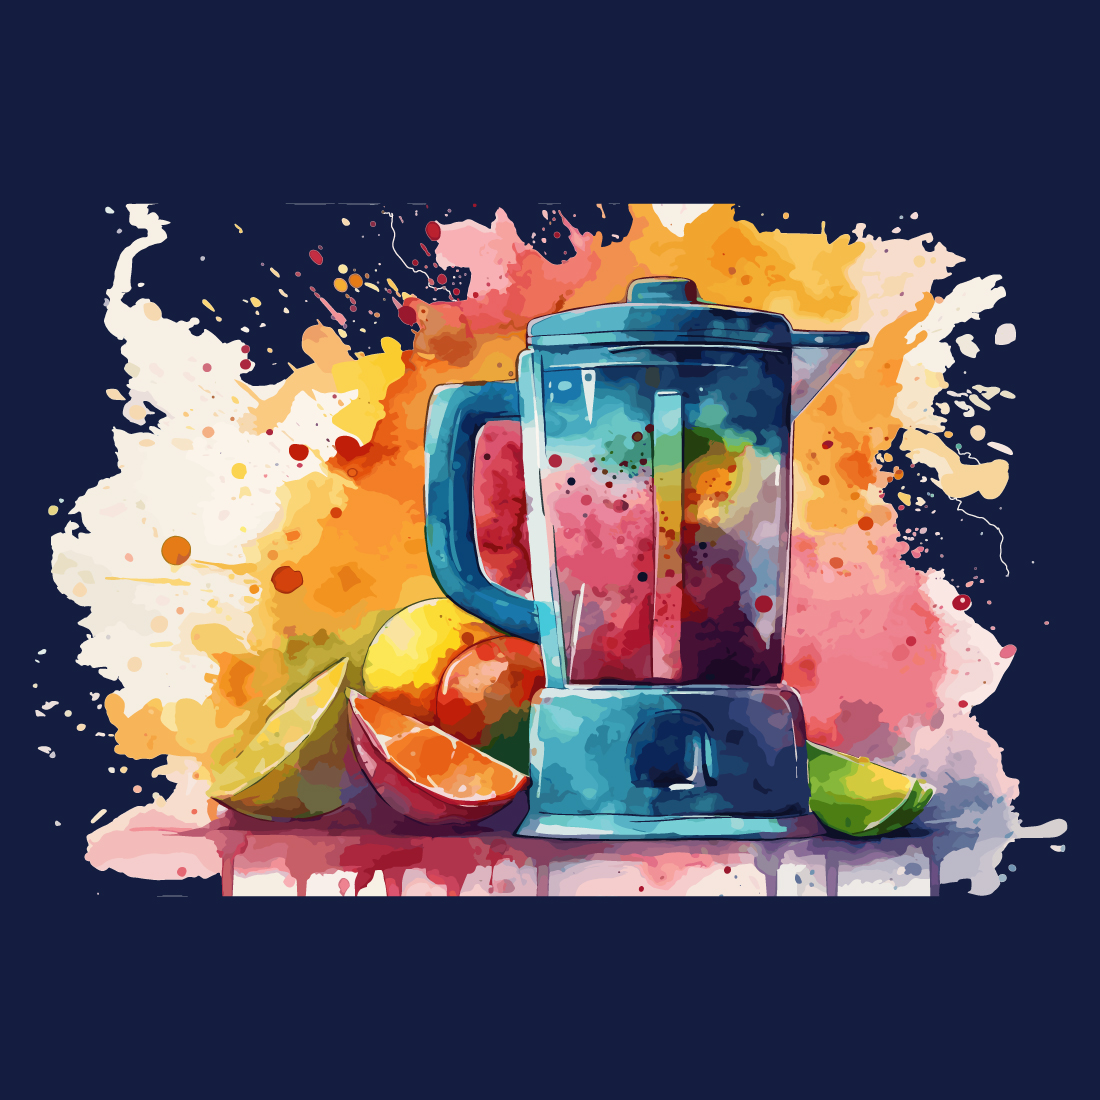 02 blender making juice colorful background watercolor 2d33c328 c668 40ac 9846 f1722633905f.jpg2 369